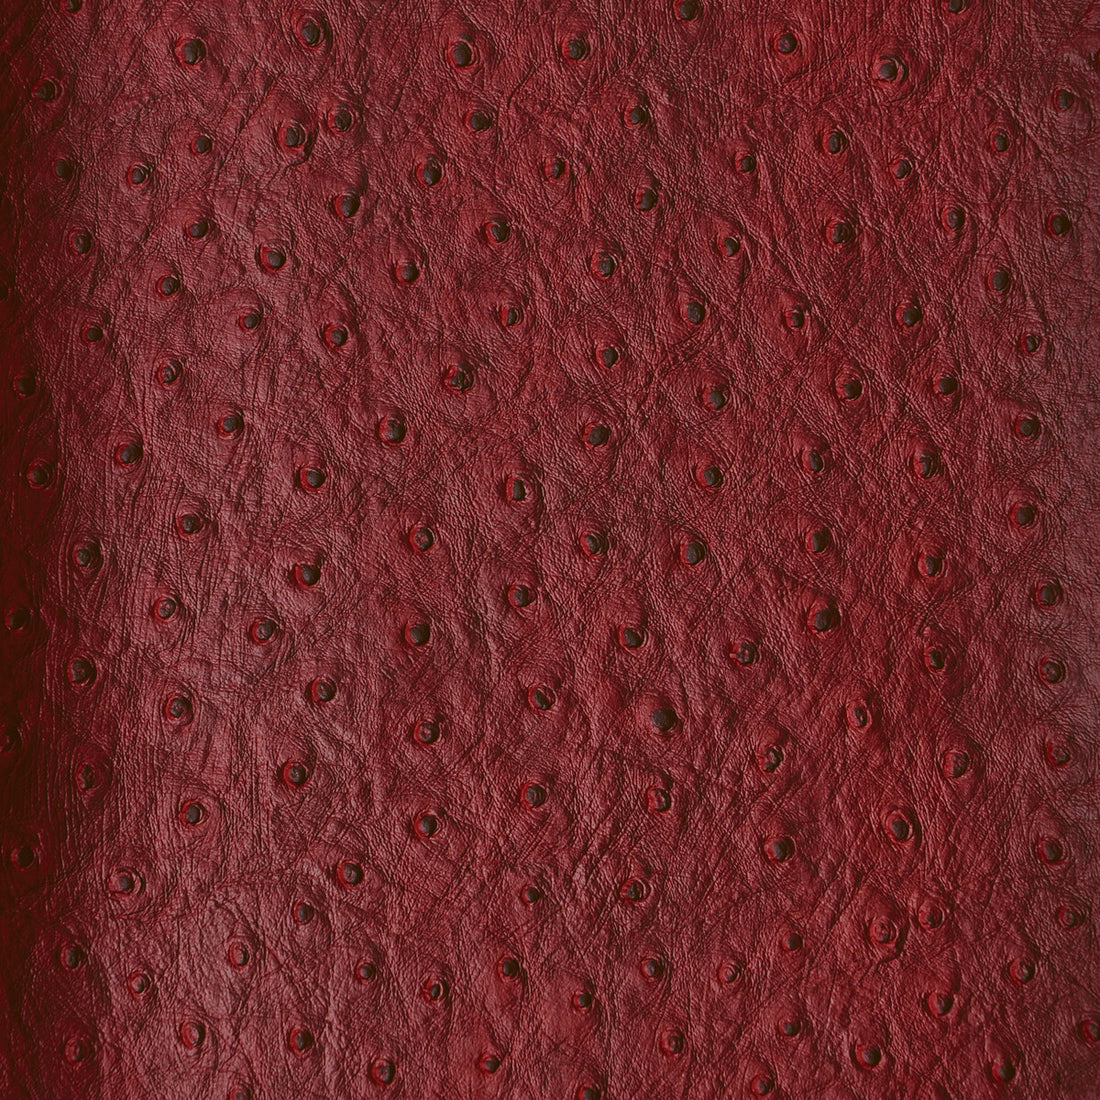 Kravet Design fabric in senna-909 color - pattern SENNA.909.0 - by Kravet Design